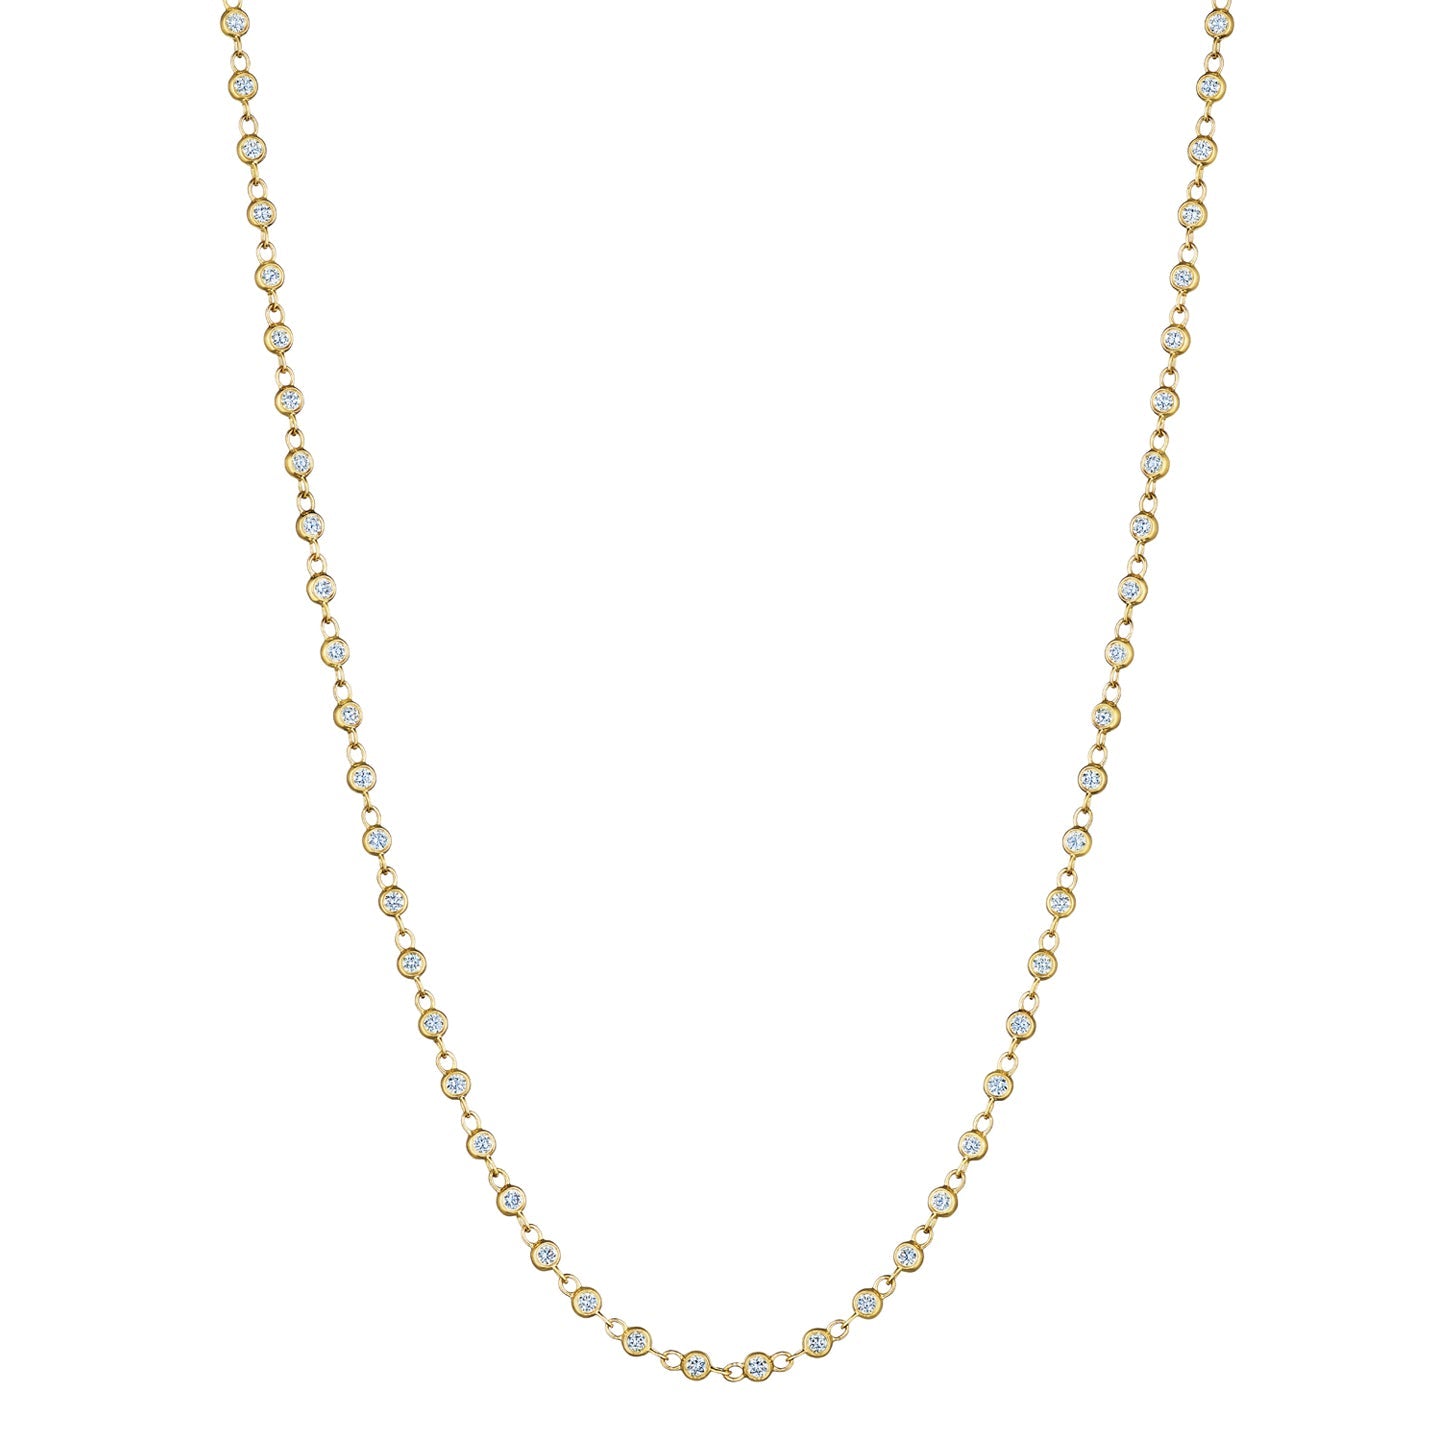 Greenleaf & Crosby - 18k Yellow Gold Bezel-Set Diamond Chain Necklace